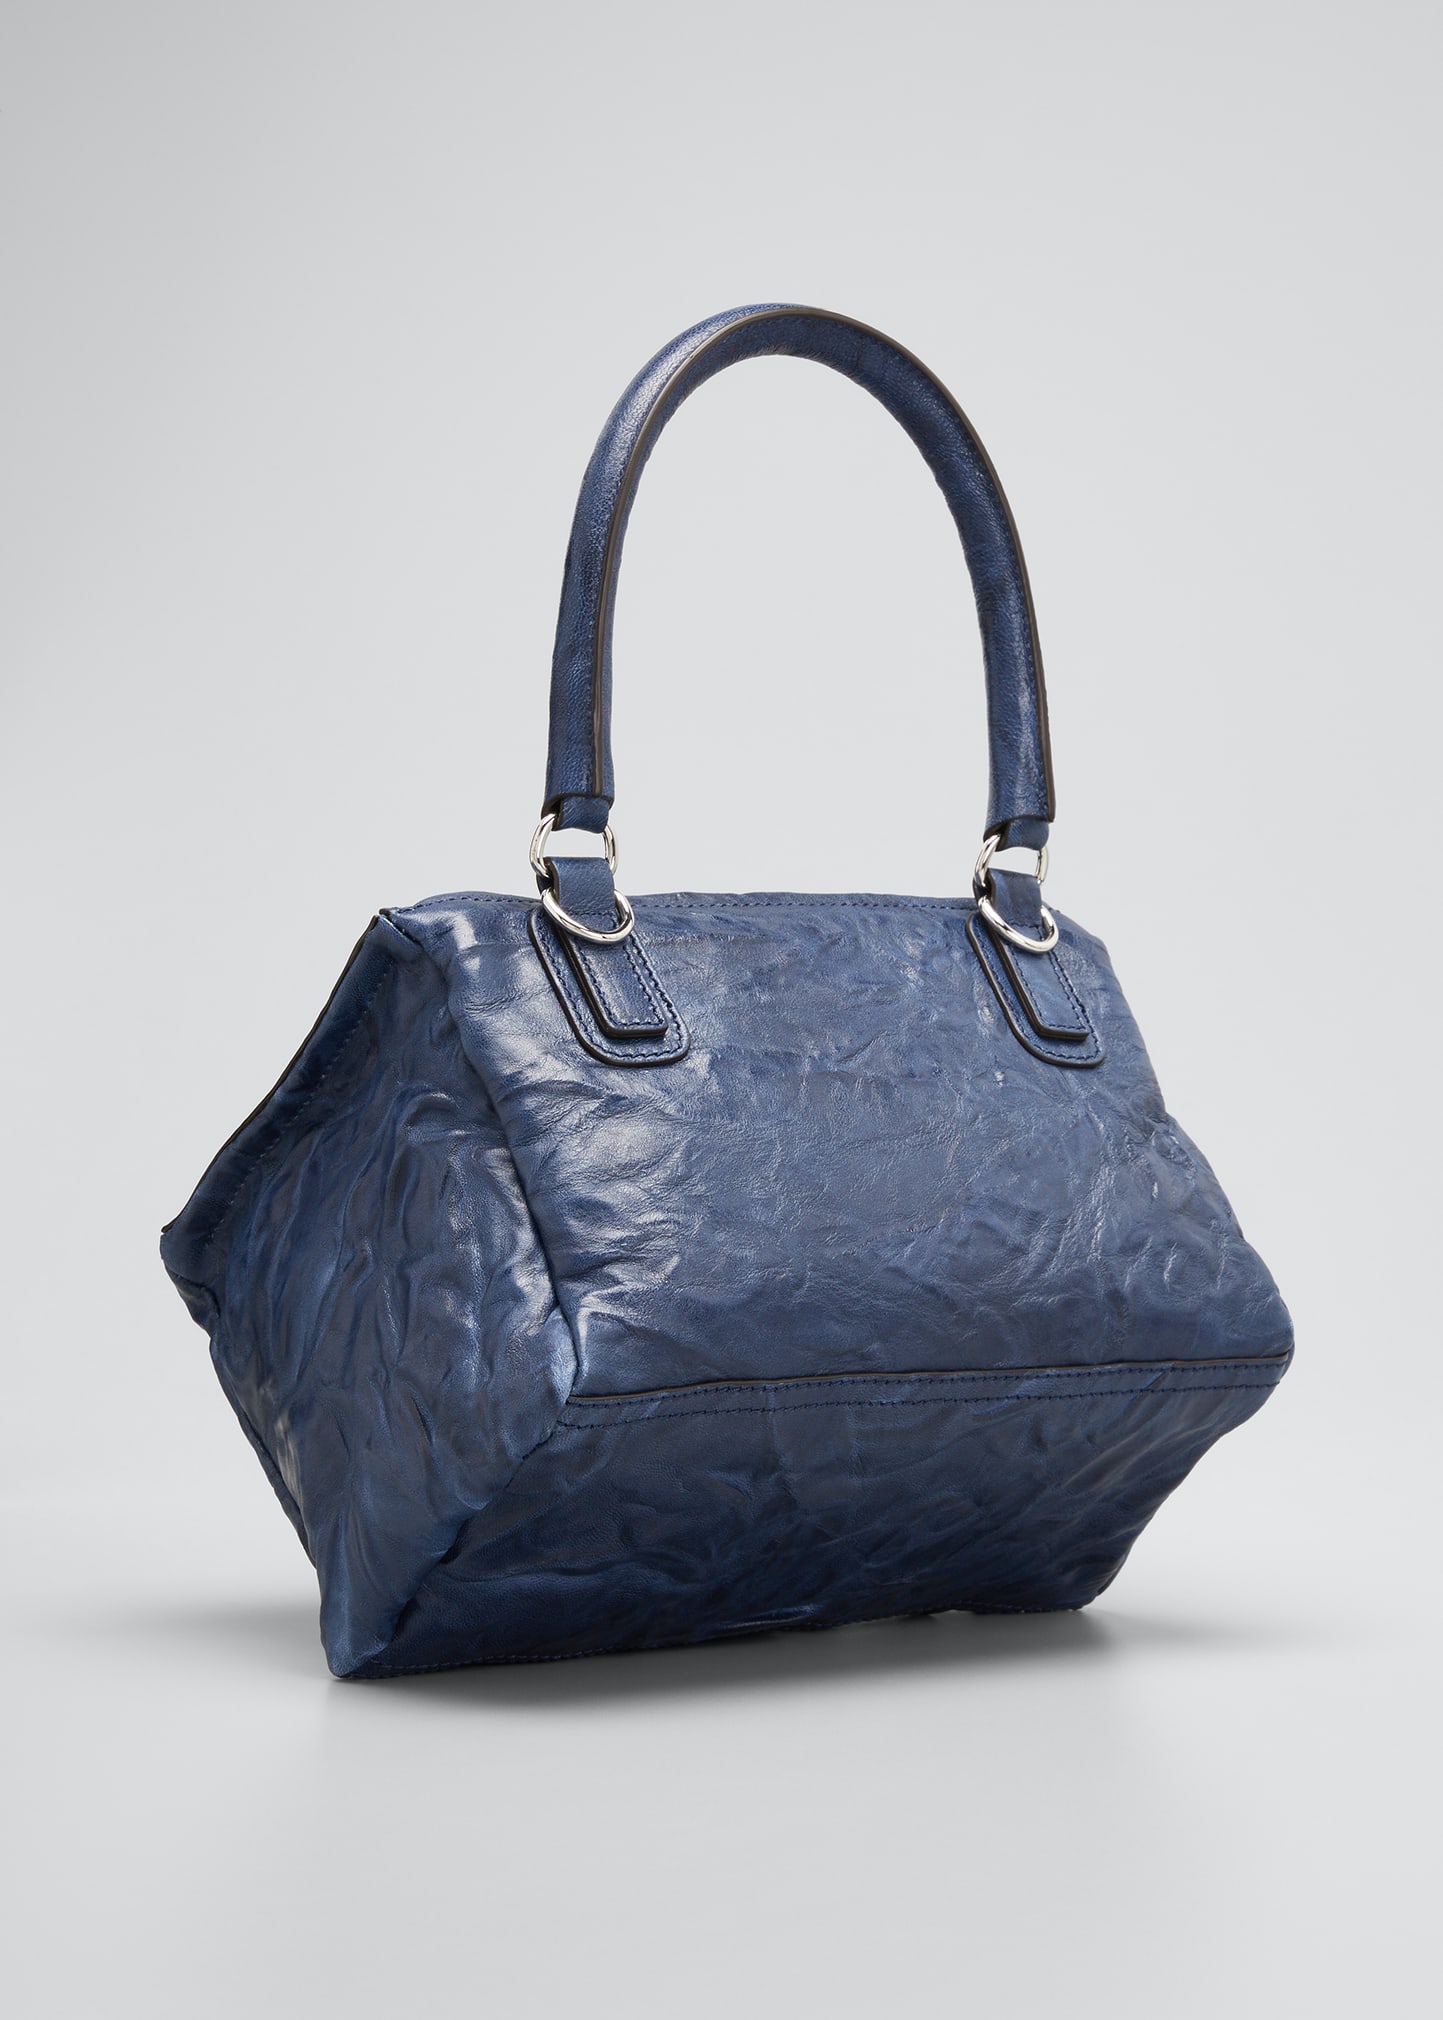 Givenchy Pandora Small Old Pepe Satchel Bag, Mineral Blue